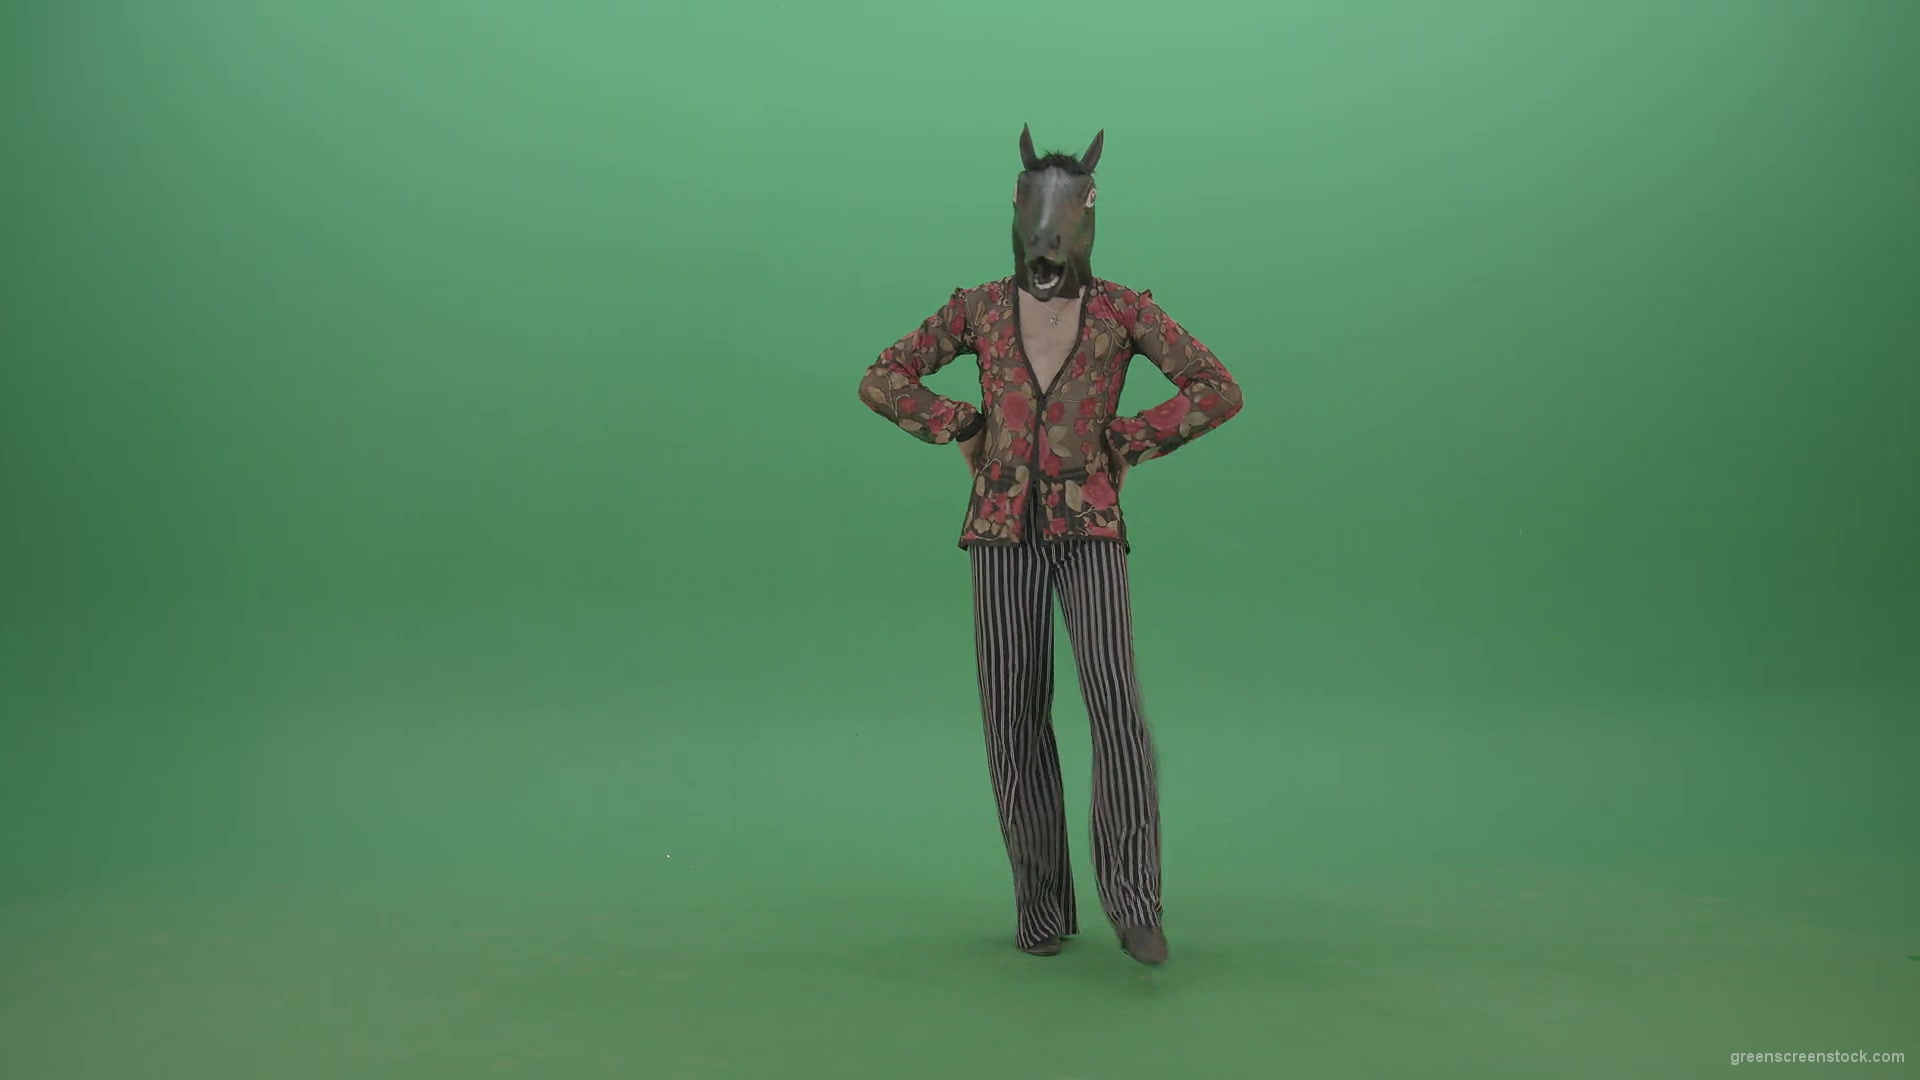 Fanny-dancing-Horse-Man-showing-ballroom-dance-on-green-screen-4K-Video-Footage-1920_007 Green Screen Stock